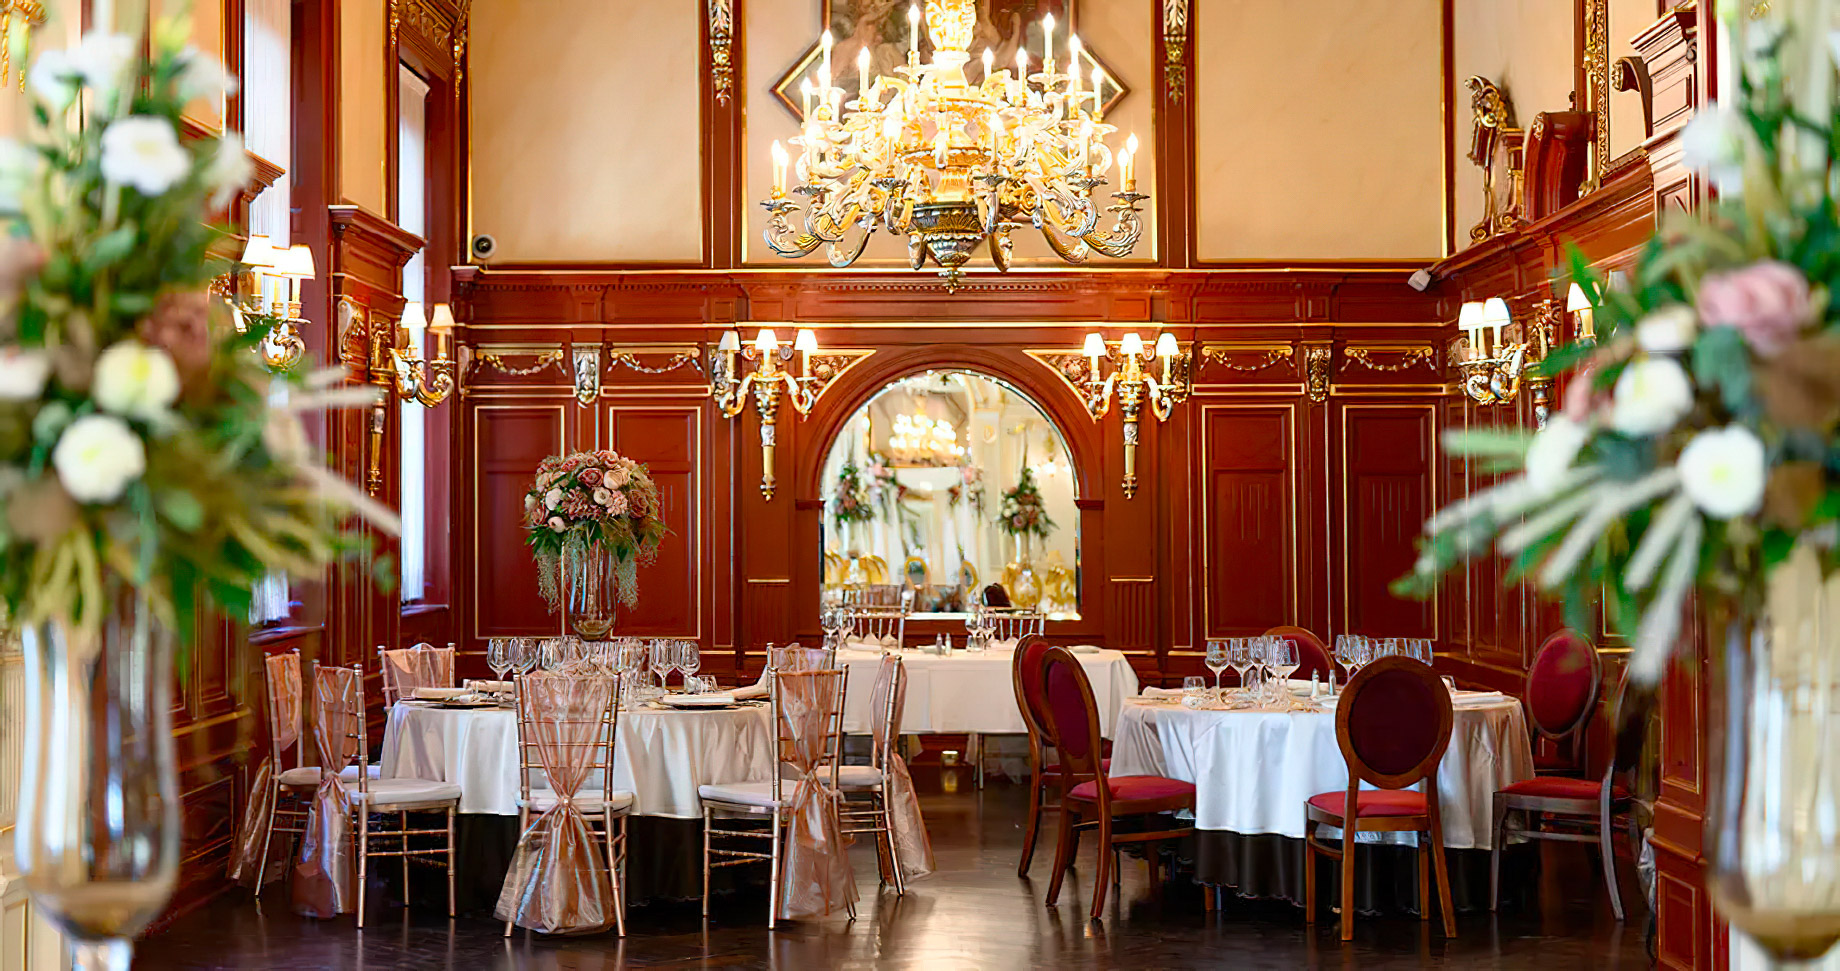 Anantara New York Palace Budapest Hotel - Hungary - Weddings Red Salon